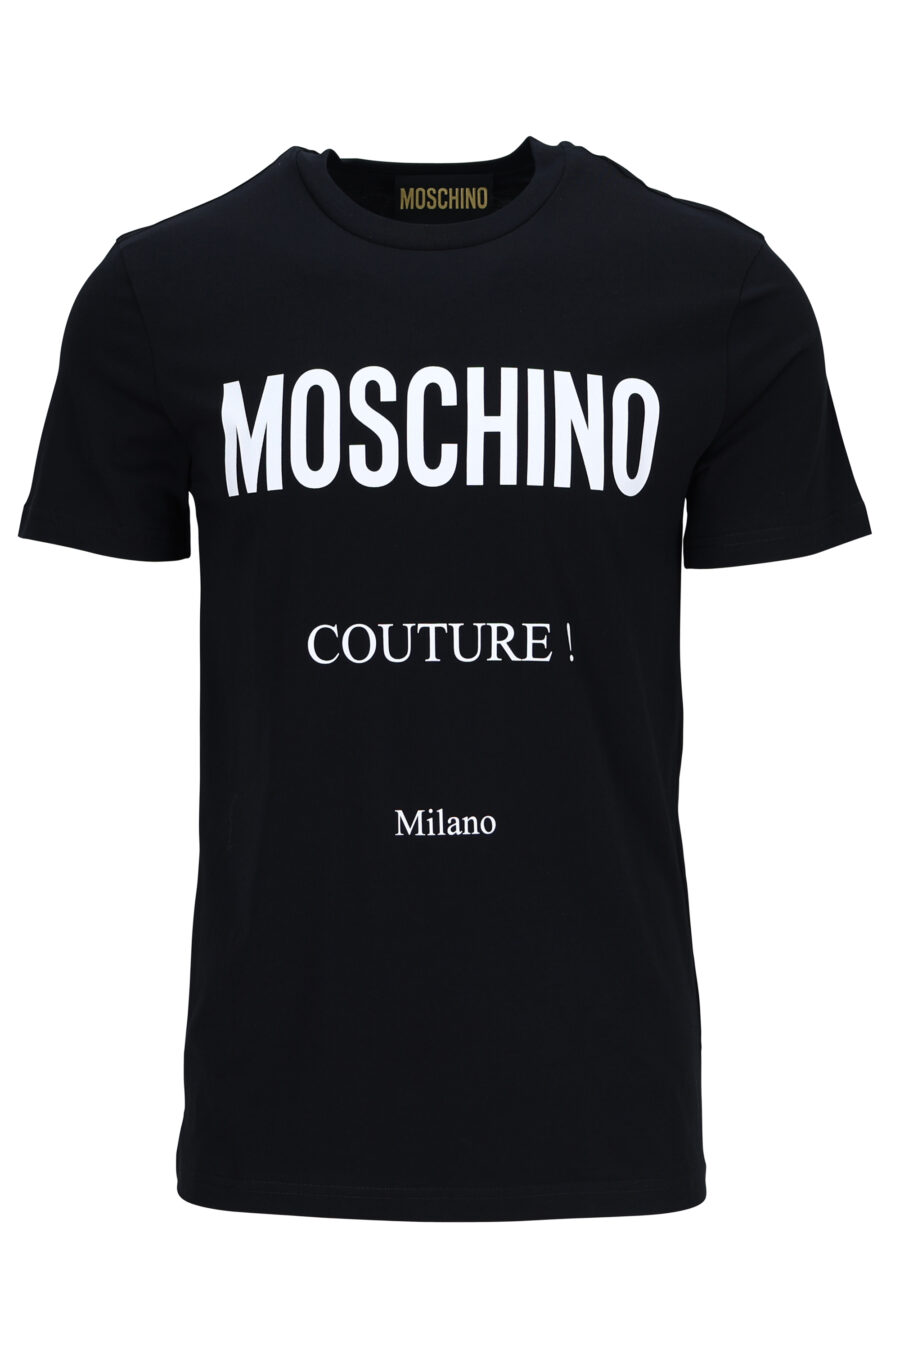 T-shirt noir avec maxilogue "couture milano" - 889316936551